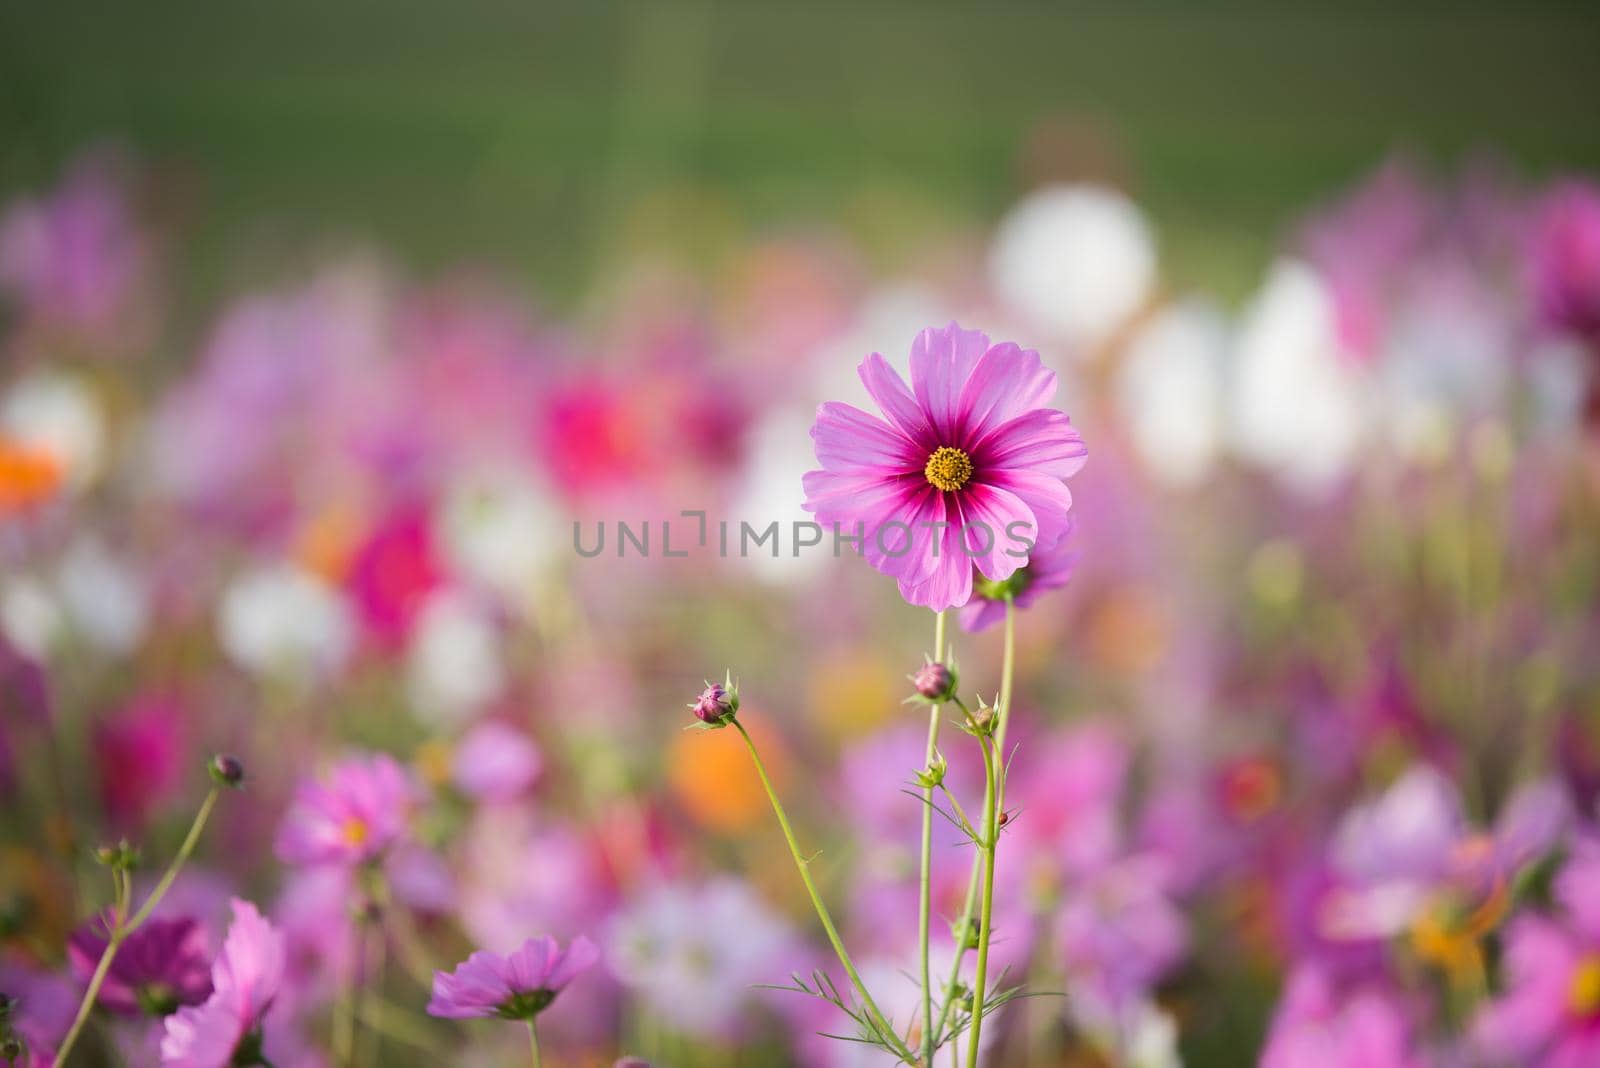 The Cosmos Flower of grassland by Wmpix